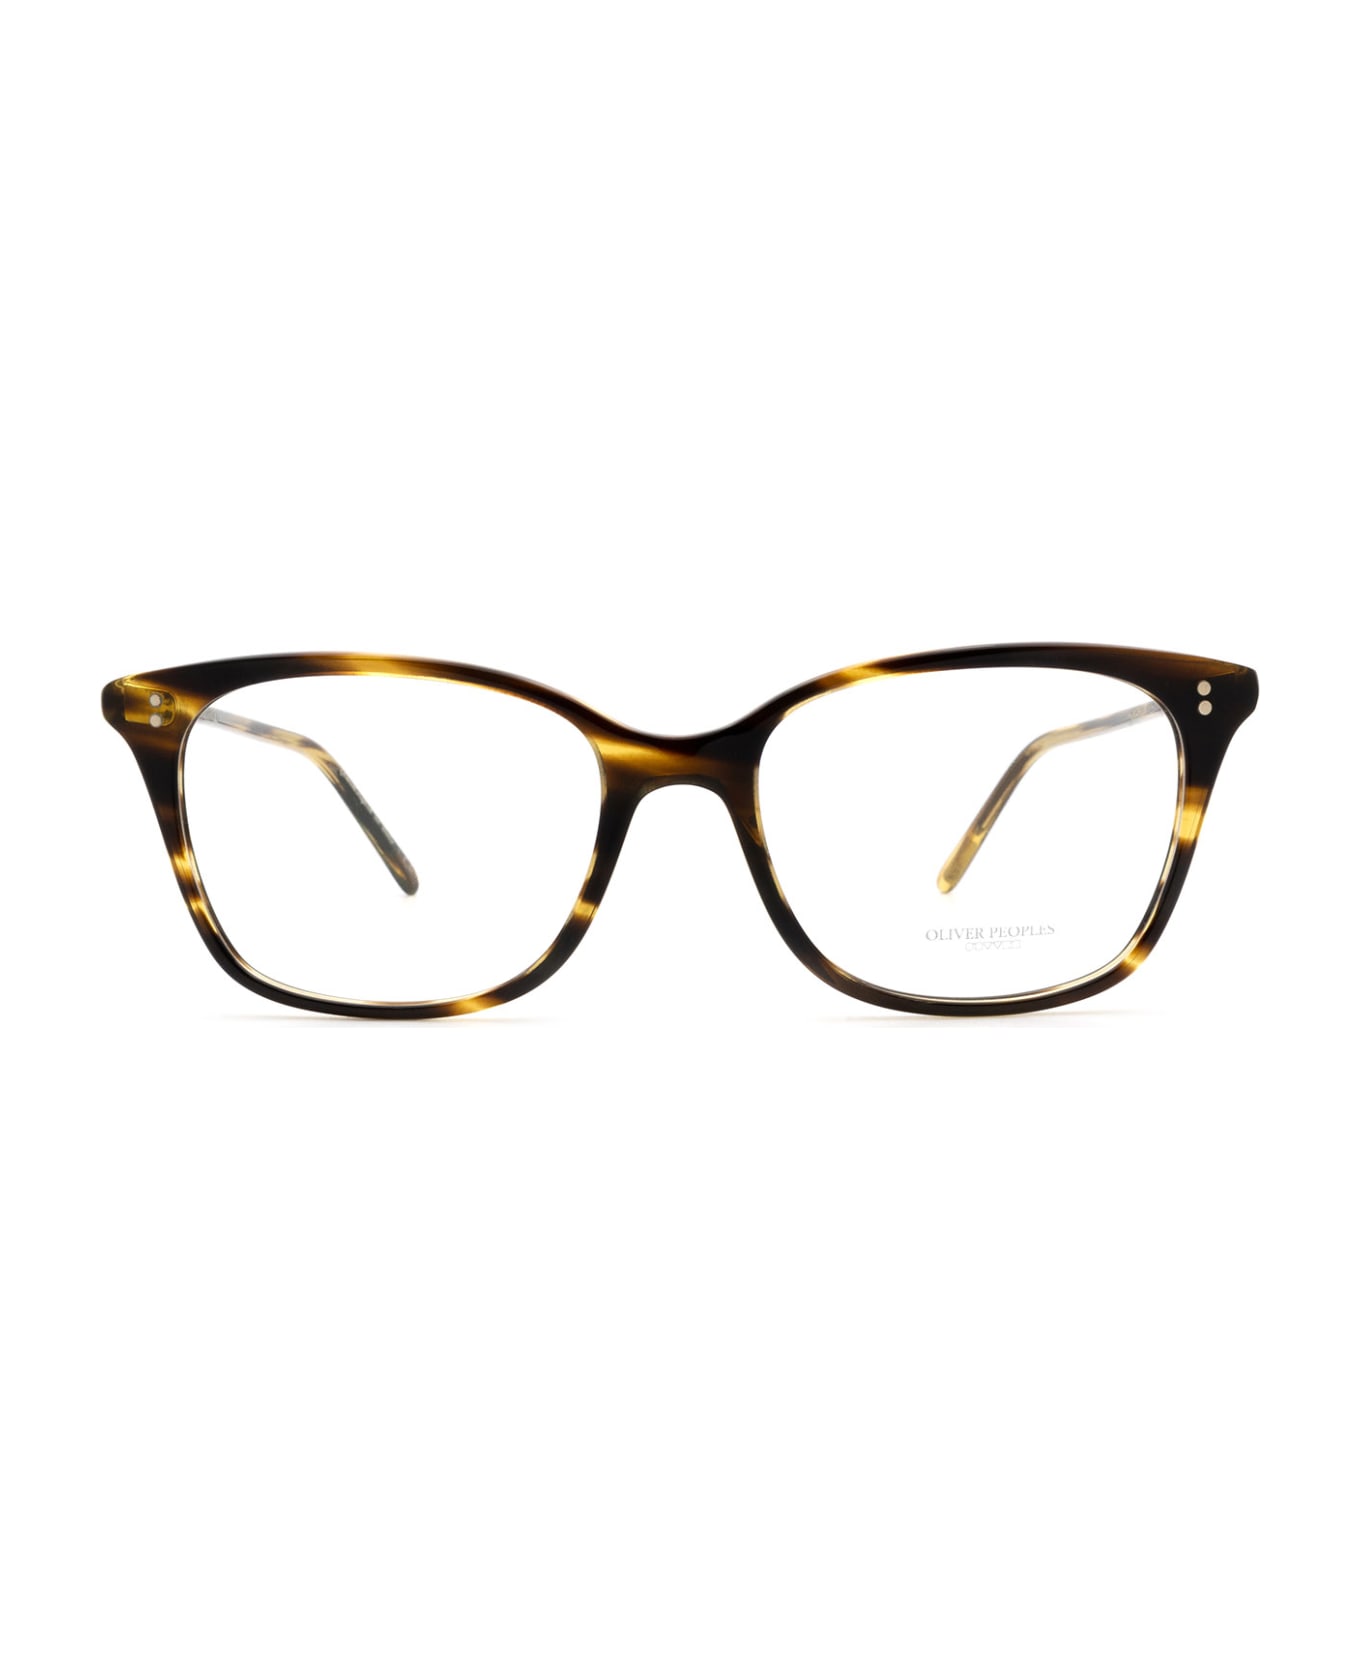 Oliver Peoples Ov5438u Cocobolo Glasses - Cocobolo